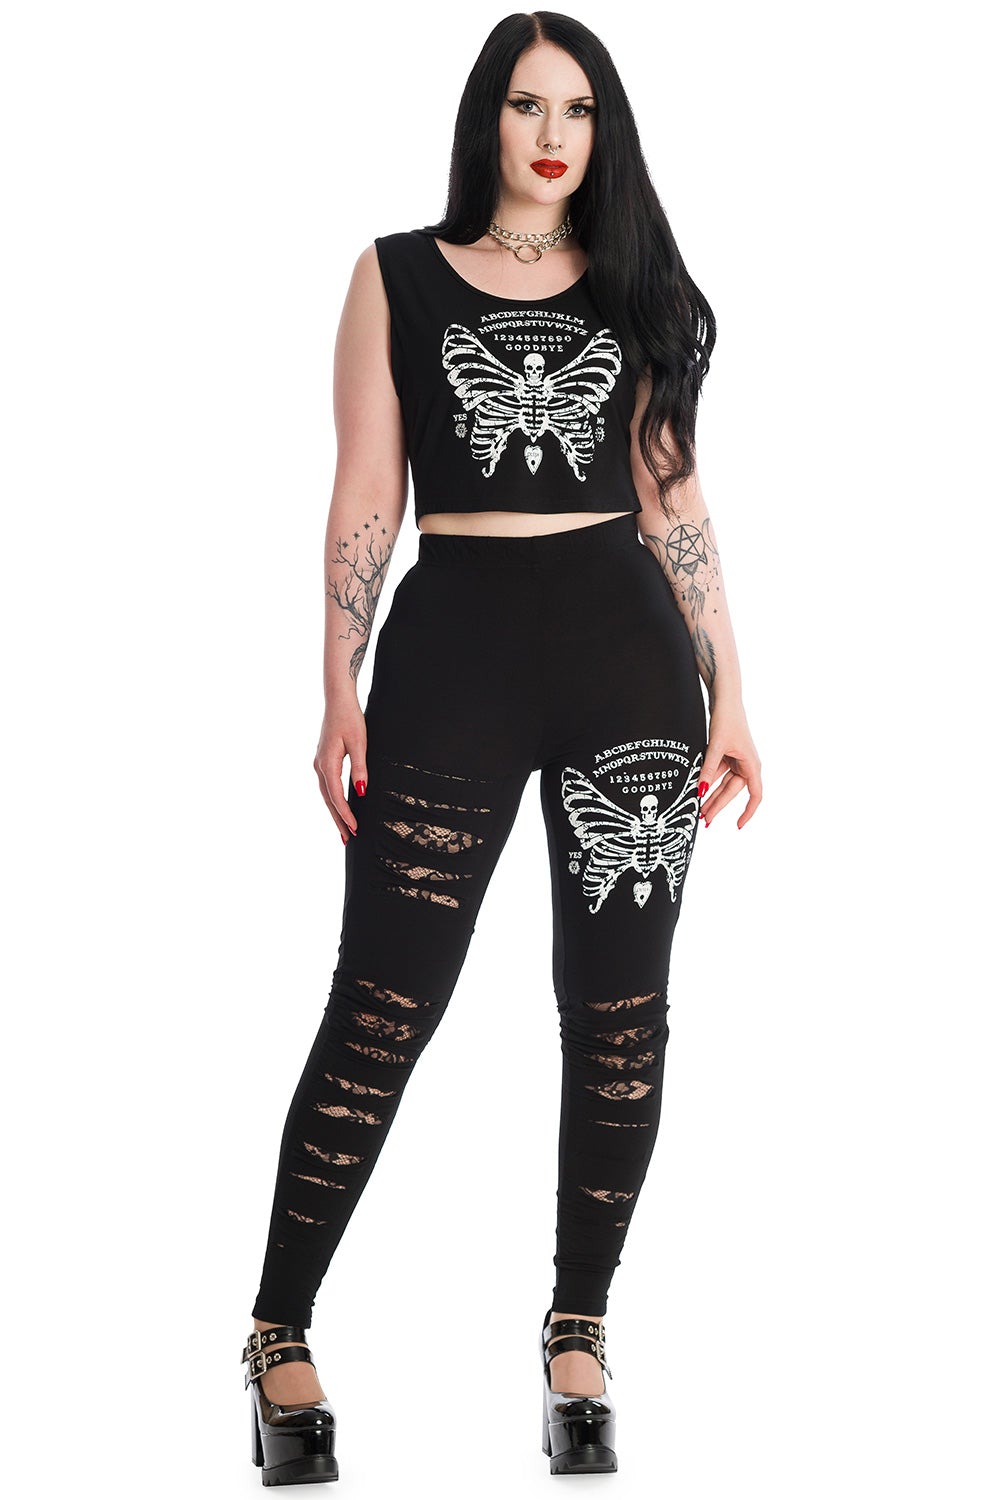 Alternative model in black sleeveless crop top with skeleton butterfly print and ouija board pattern. Model wears matching leggings. 